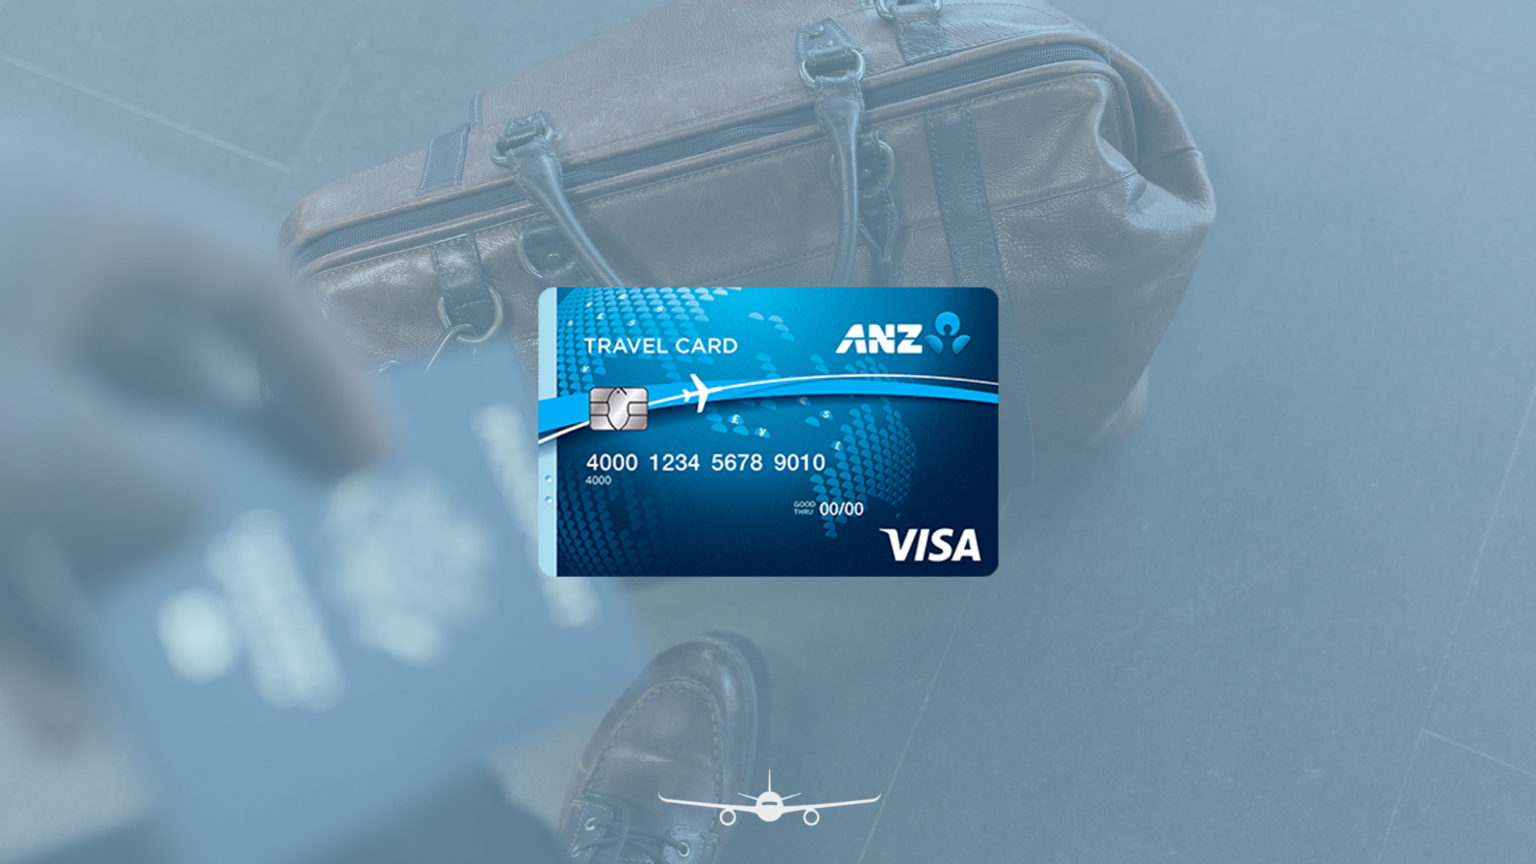 anz travel insurance visa card